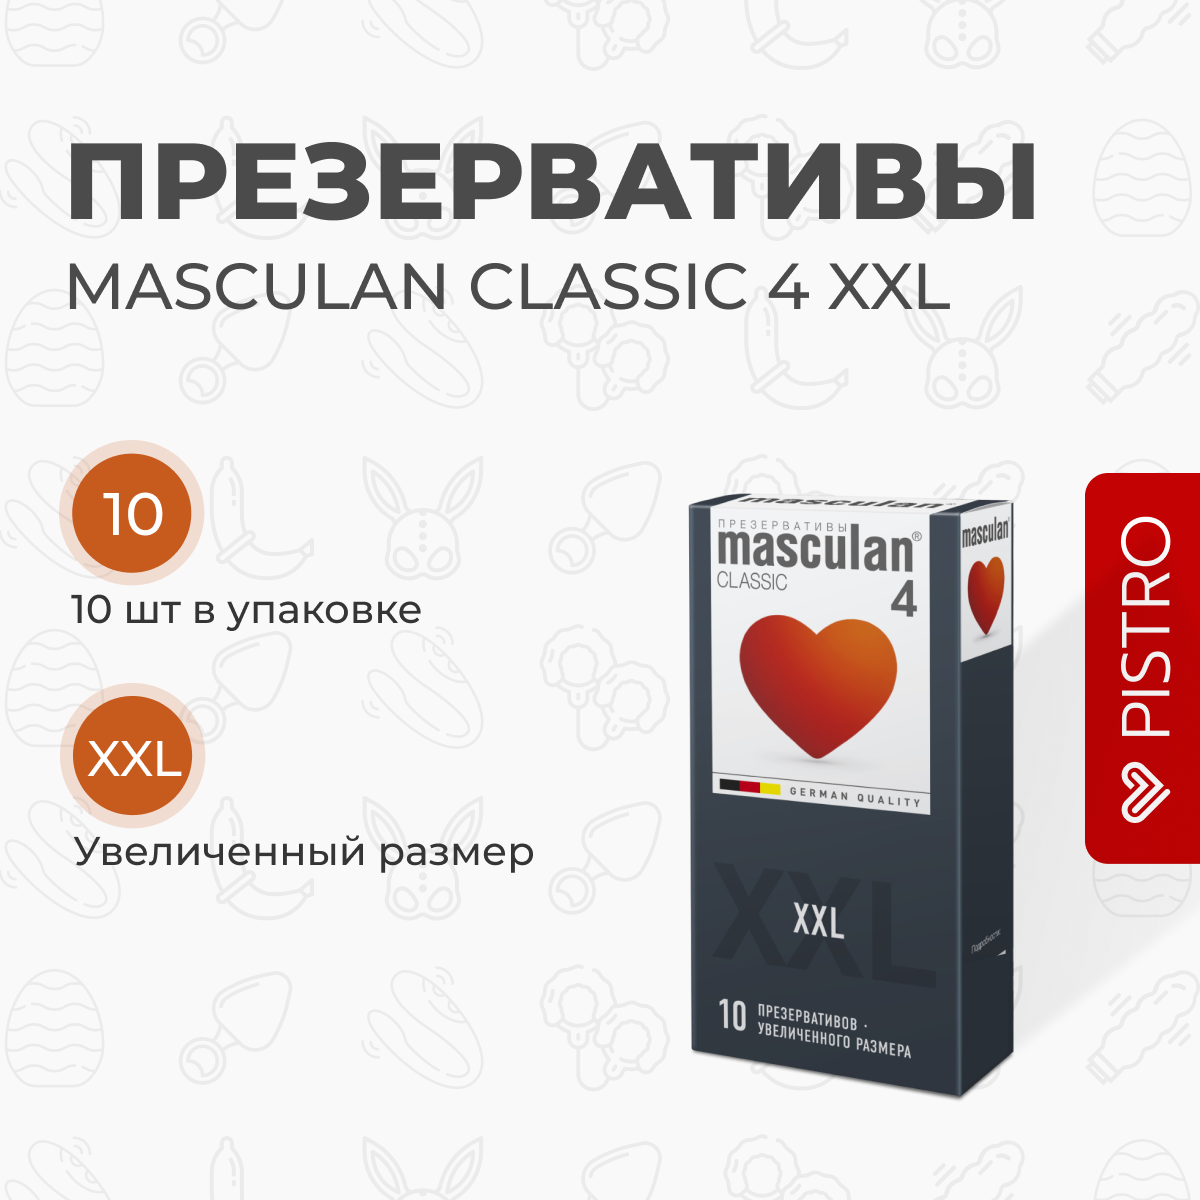 Маскулан презервативы masculan 4 classic №10 увеличенных размеров, розового цвета М.П.И.Фармацойтика Гмбх - фото №13